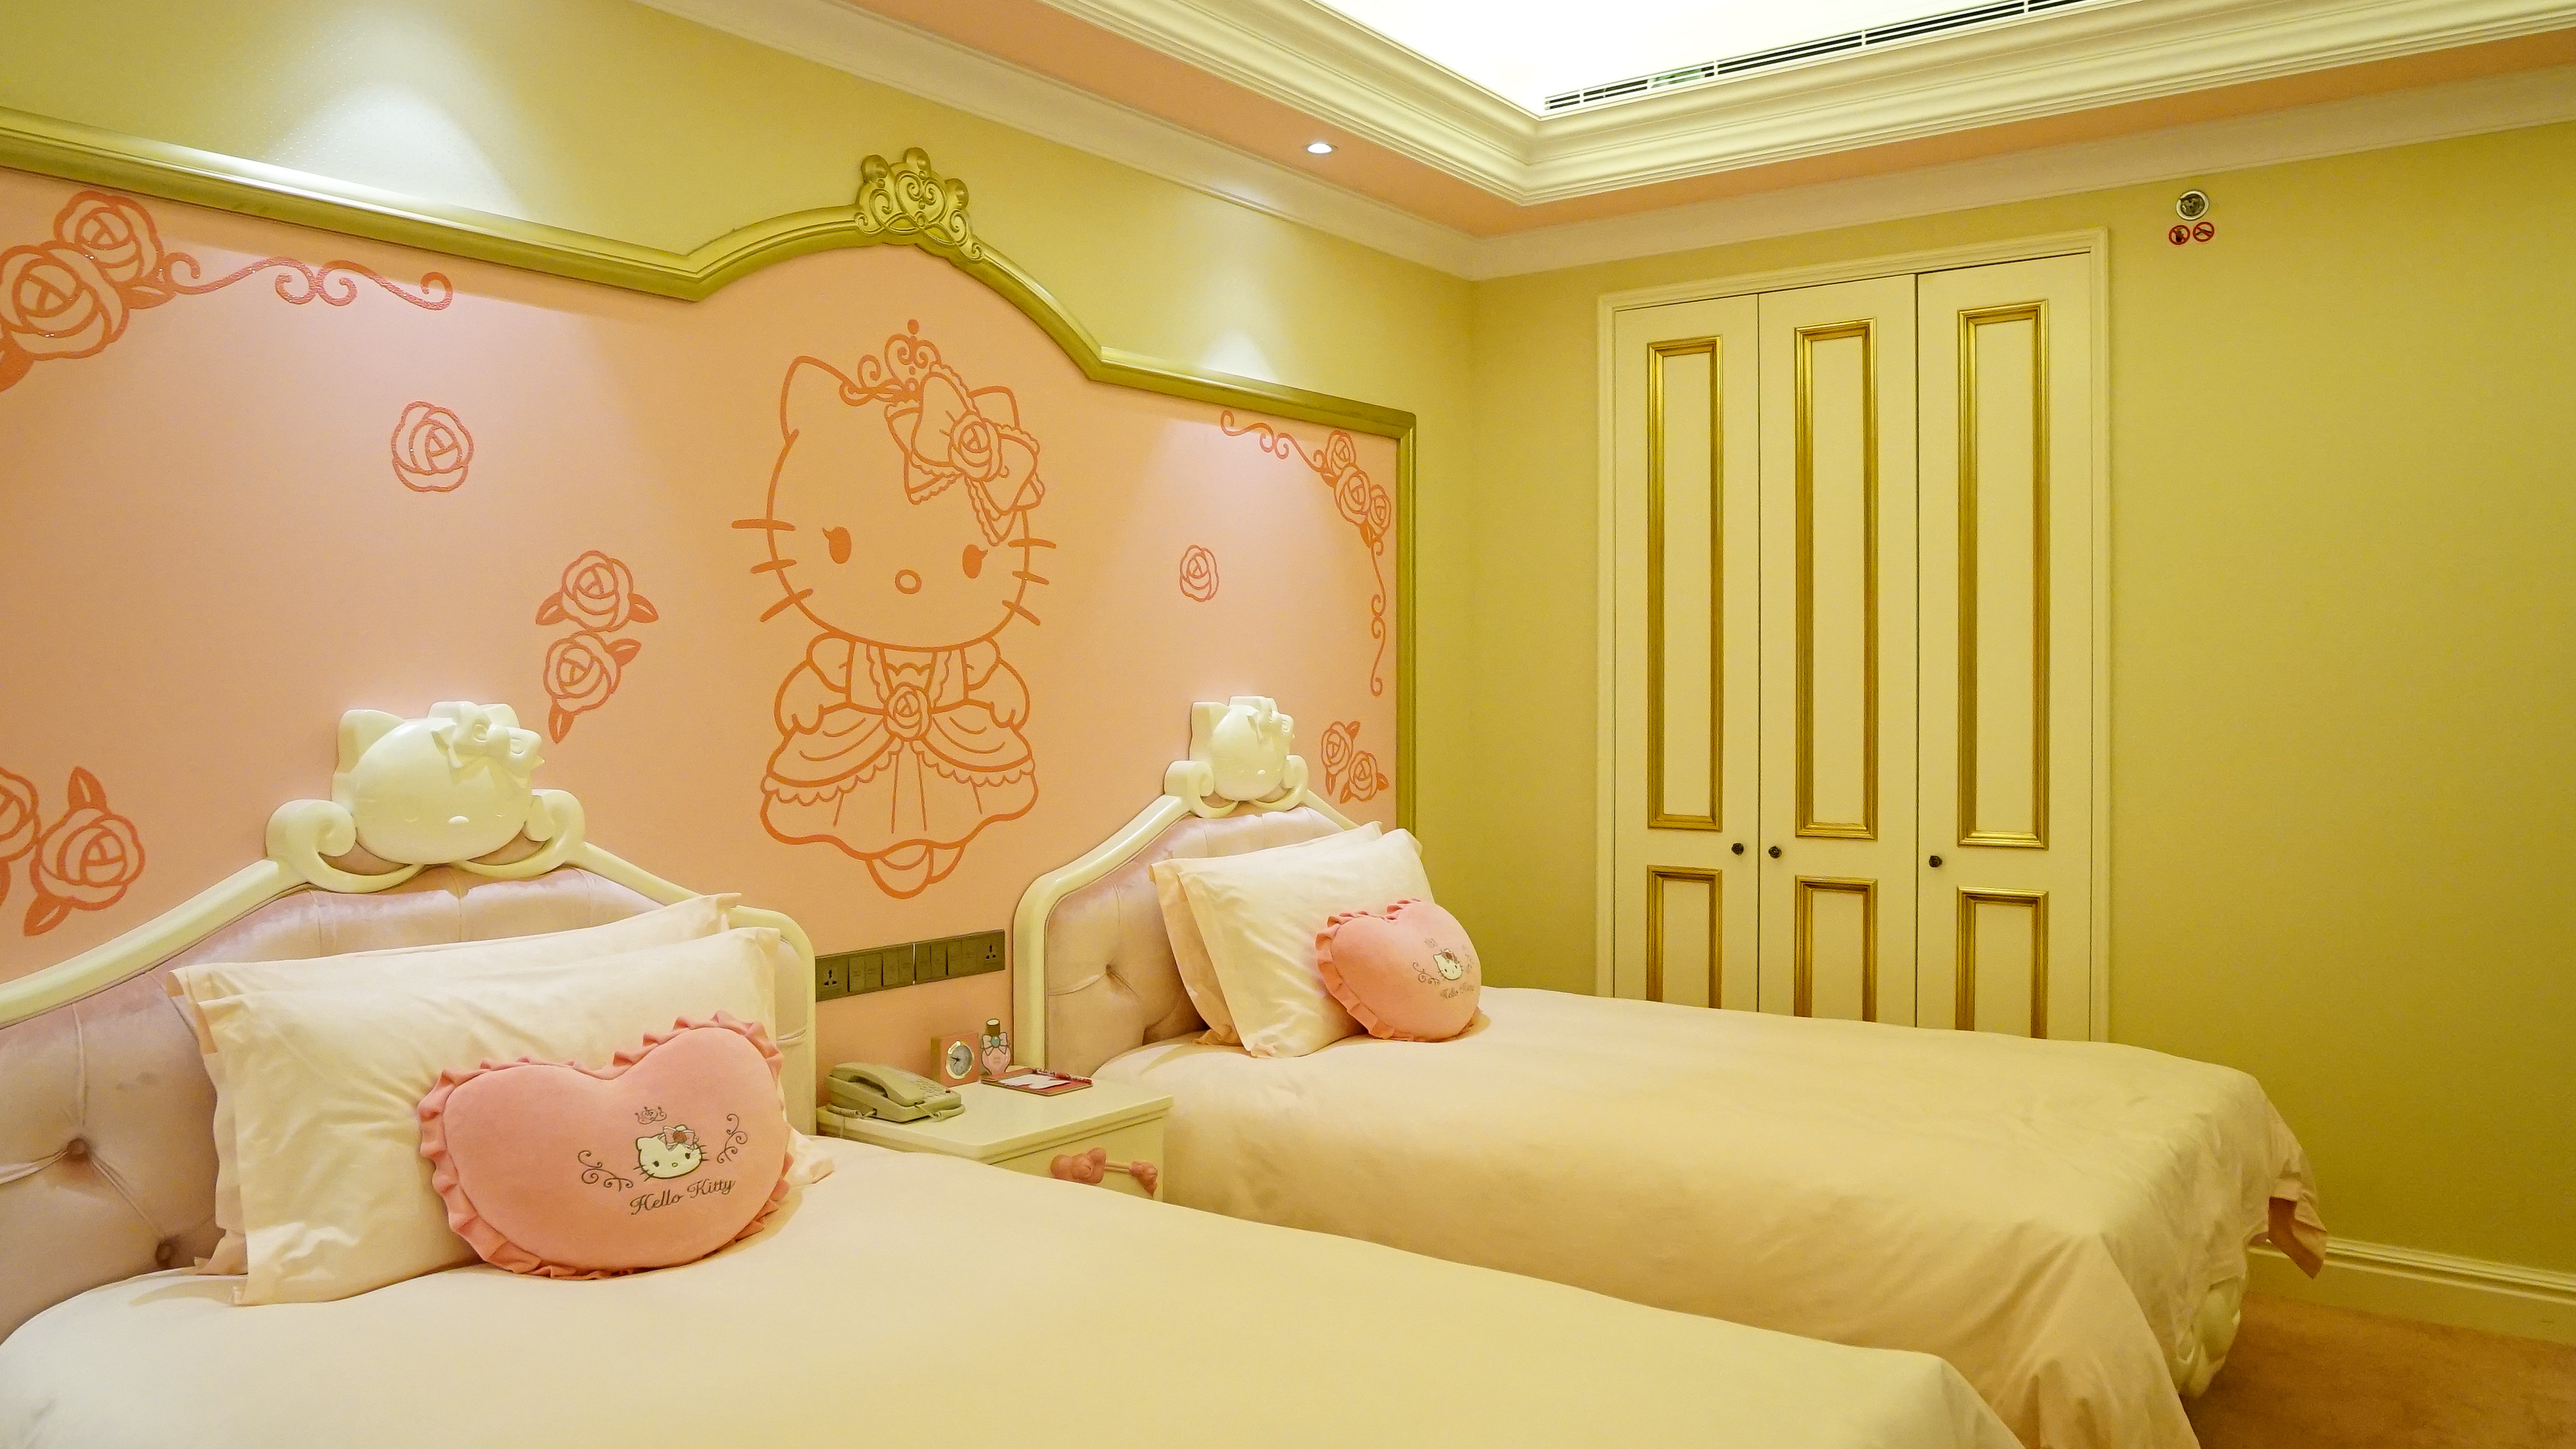 大仁生活: 7-11 Sanrio Hello Kitty城堡系列又襲7-ELEVEN